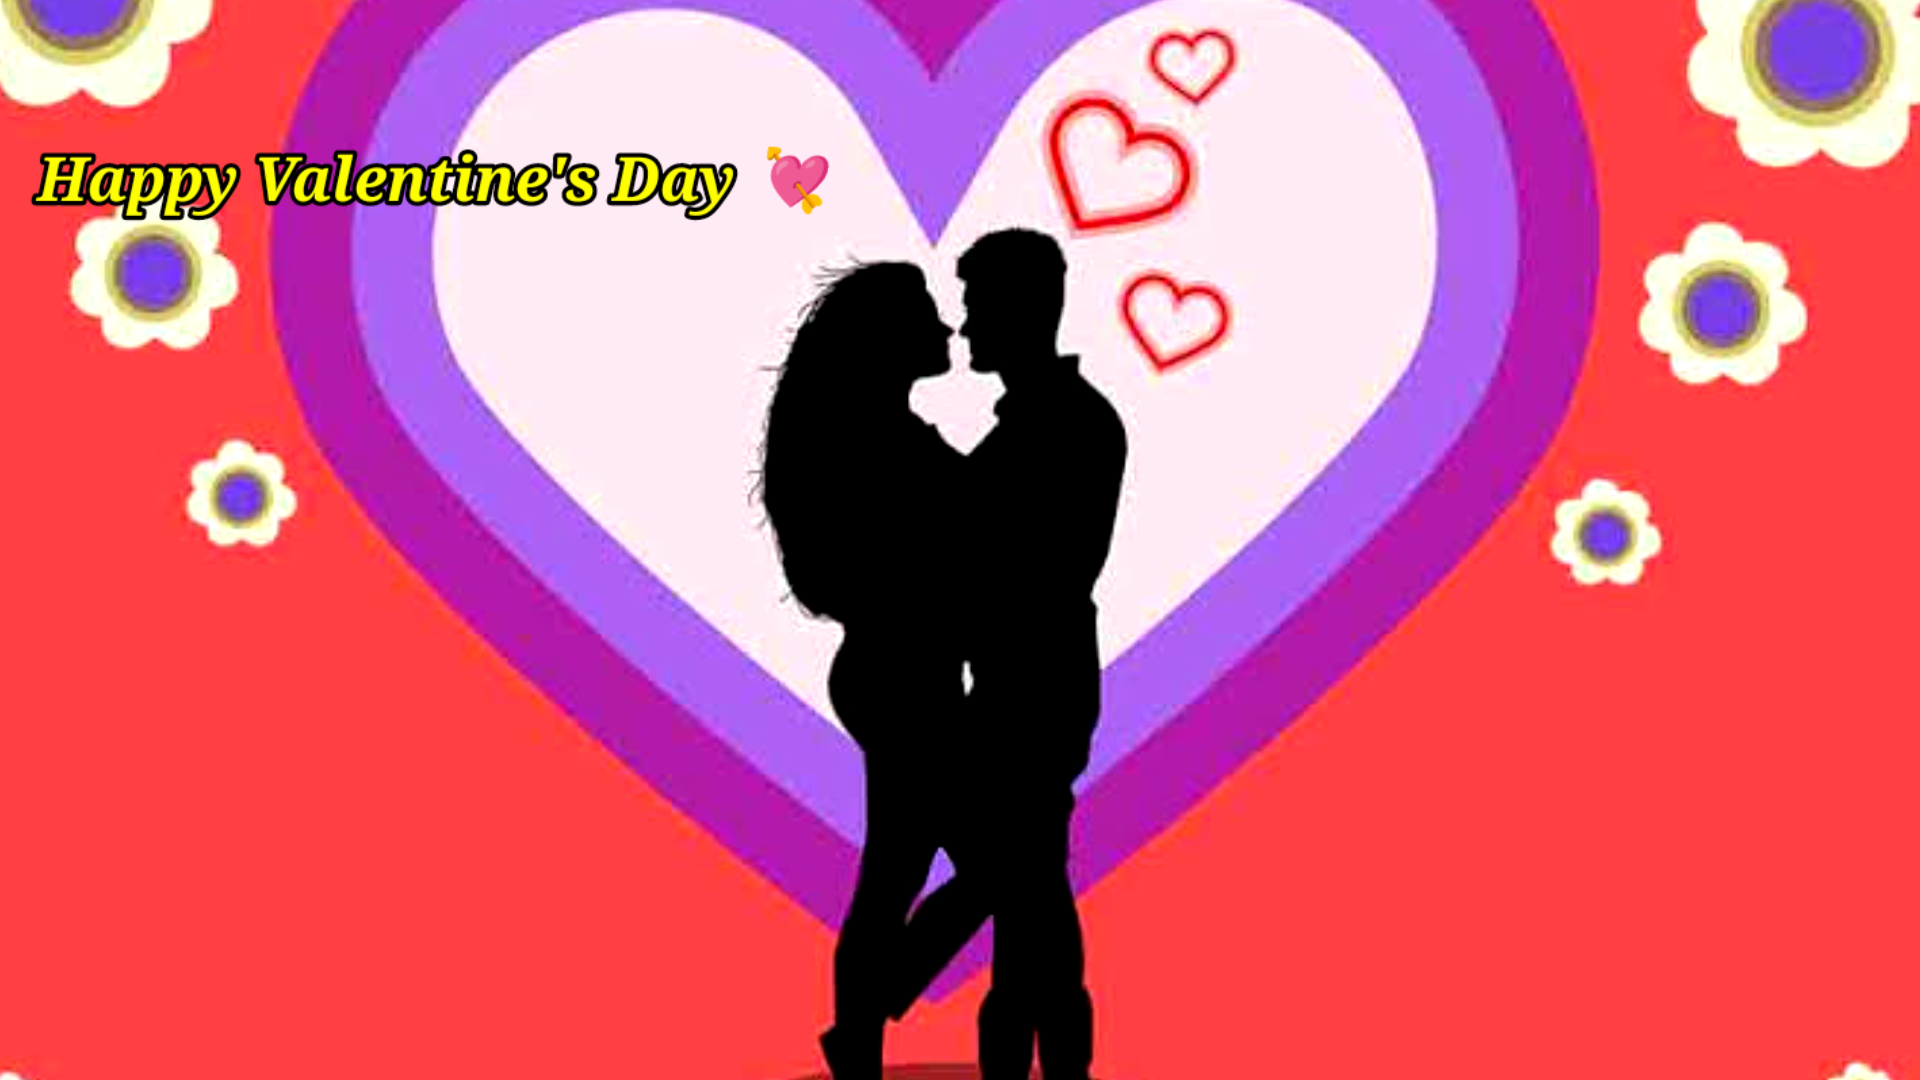 Valentine's Day histotory, Romantic Valentine's Day ideas, Valentine's Day gifts